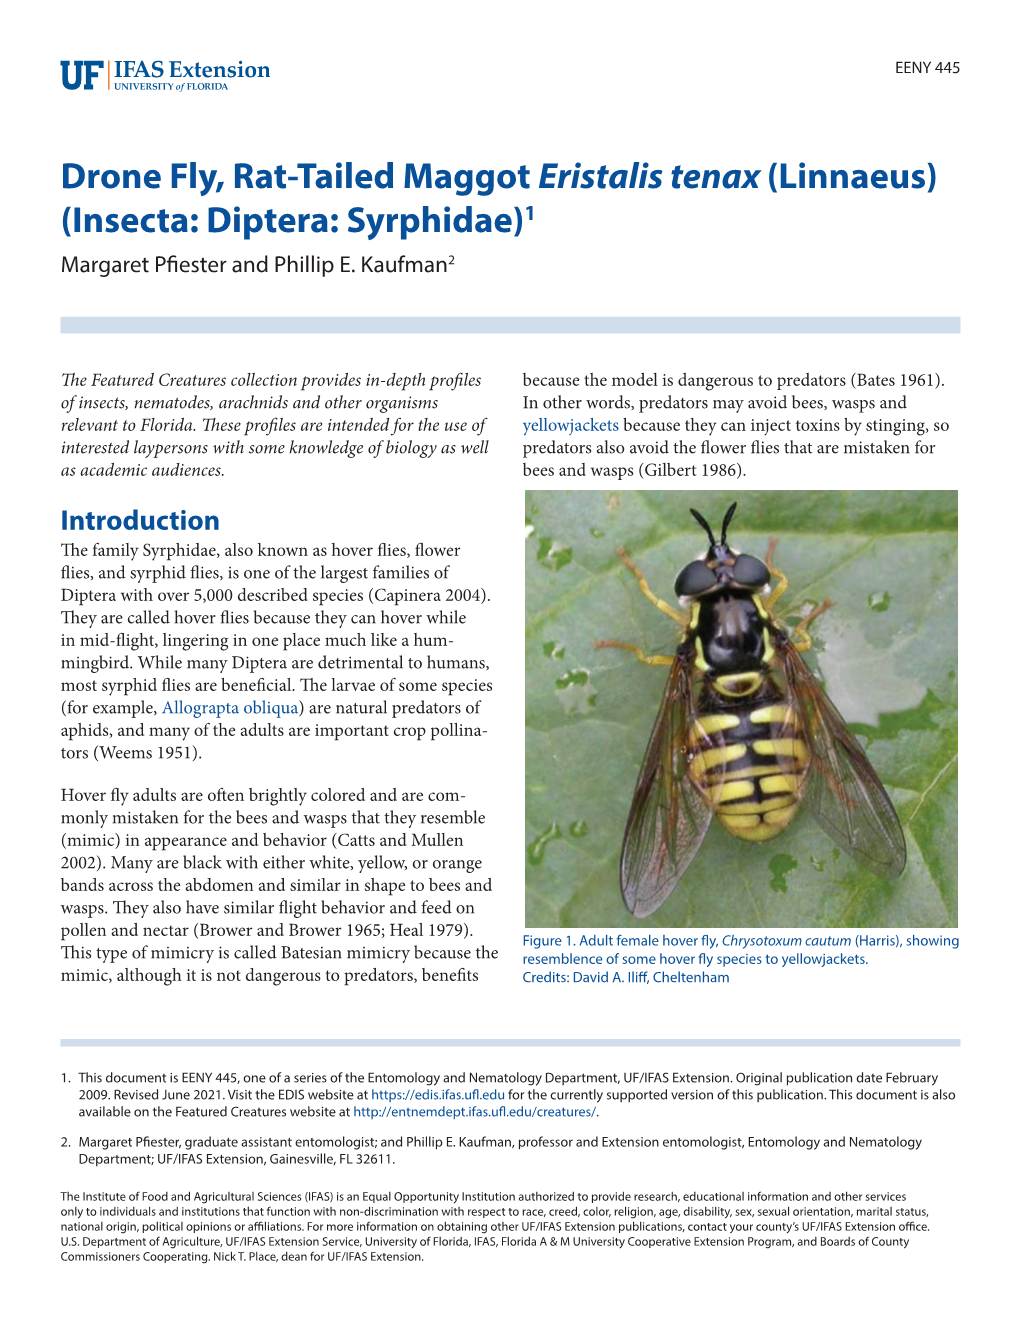 Drone Fly, Rat-Tailed Maggot Eristalis Tenax (Linnaeus) (Insecta: Diptera: Syrphidae)1 Margaret Pfiester and Phillip E